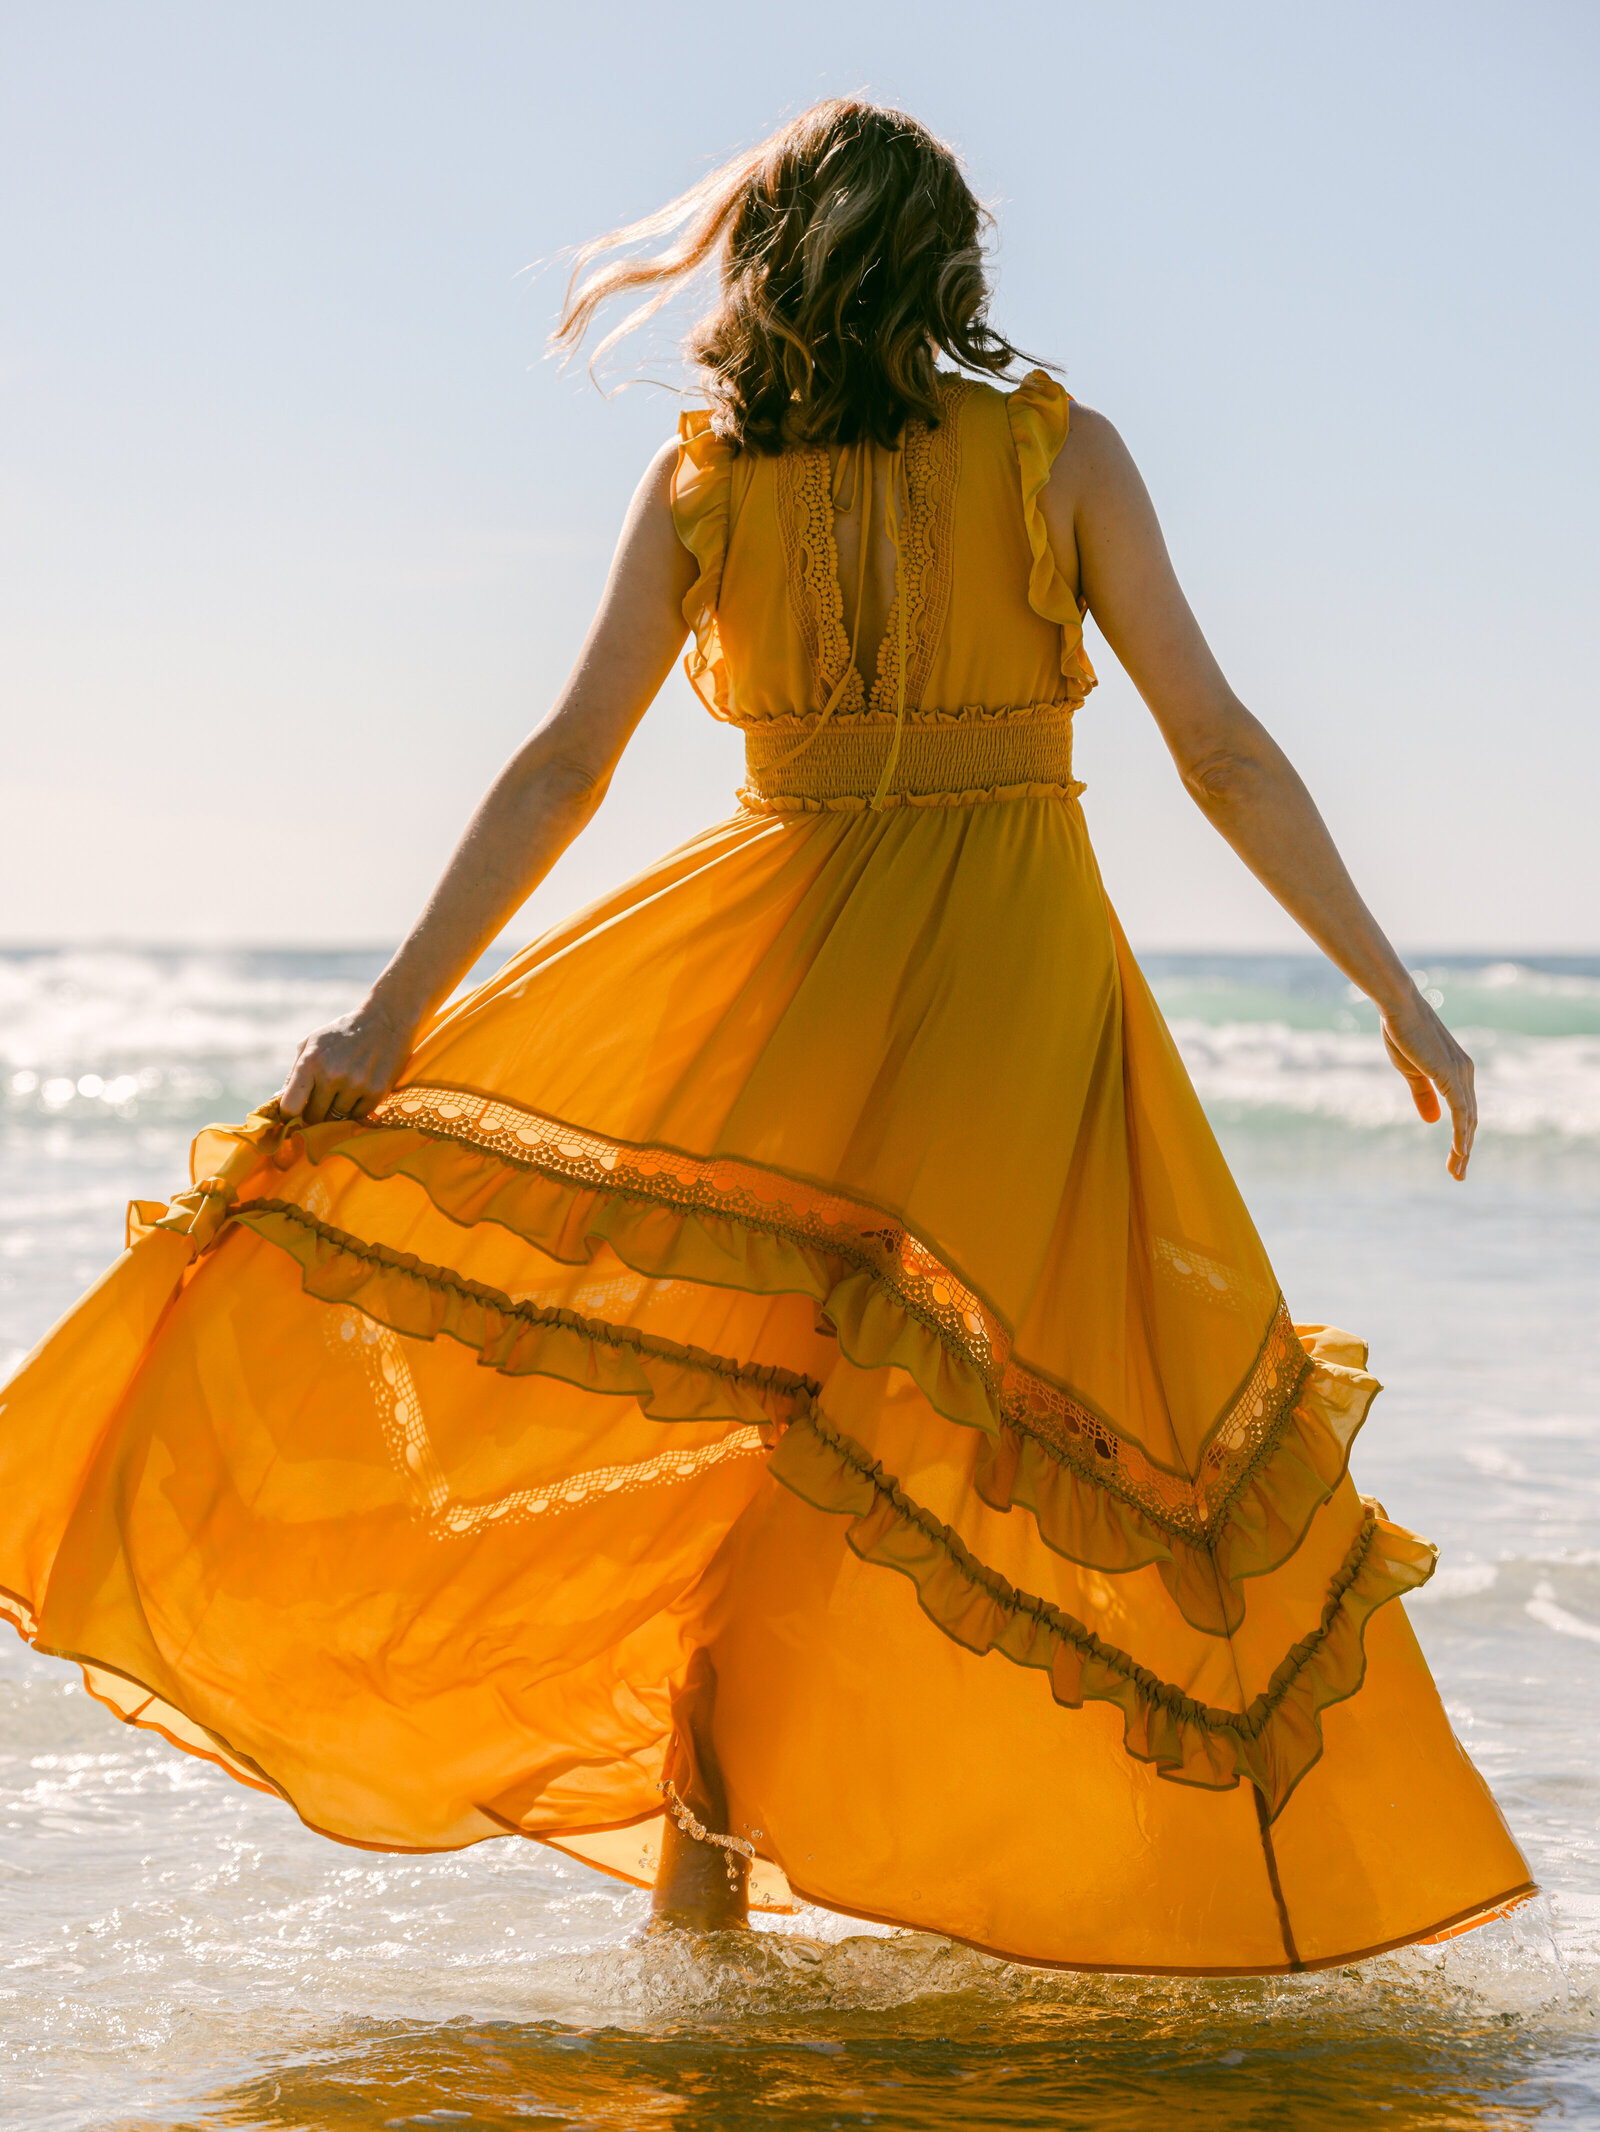 boho girl at beach in the ocean water california fashion photography